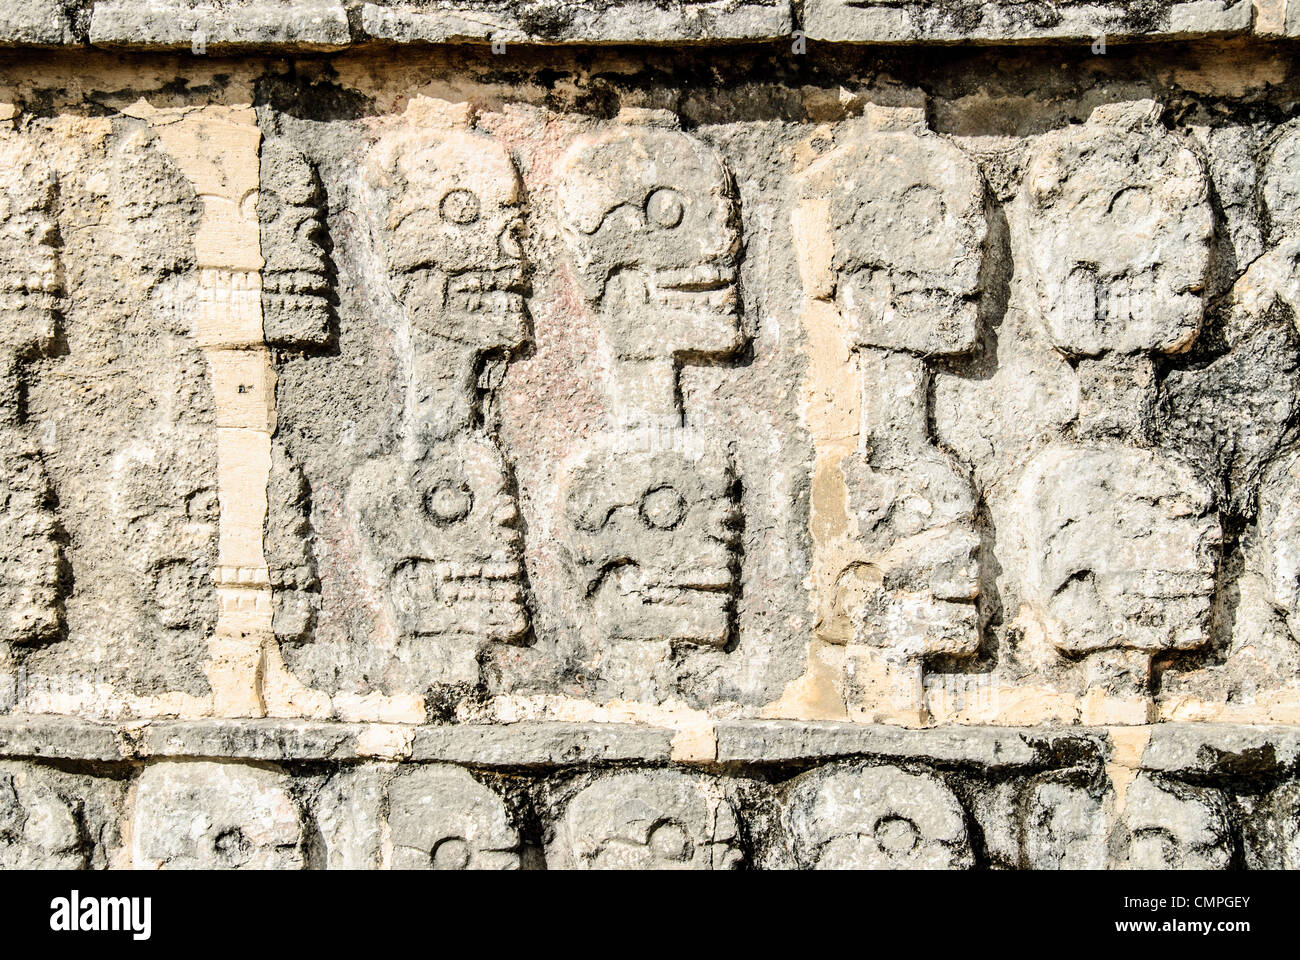 CHICHEN ITZA, Mexico - Depiction of skulls carved in stone at Chichen Itza, Mexico. Stock Photo